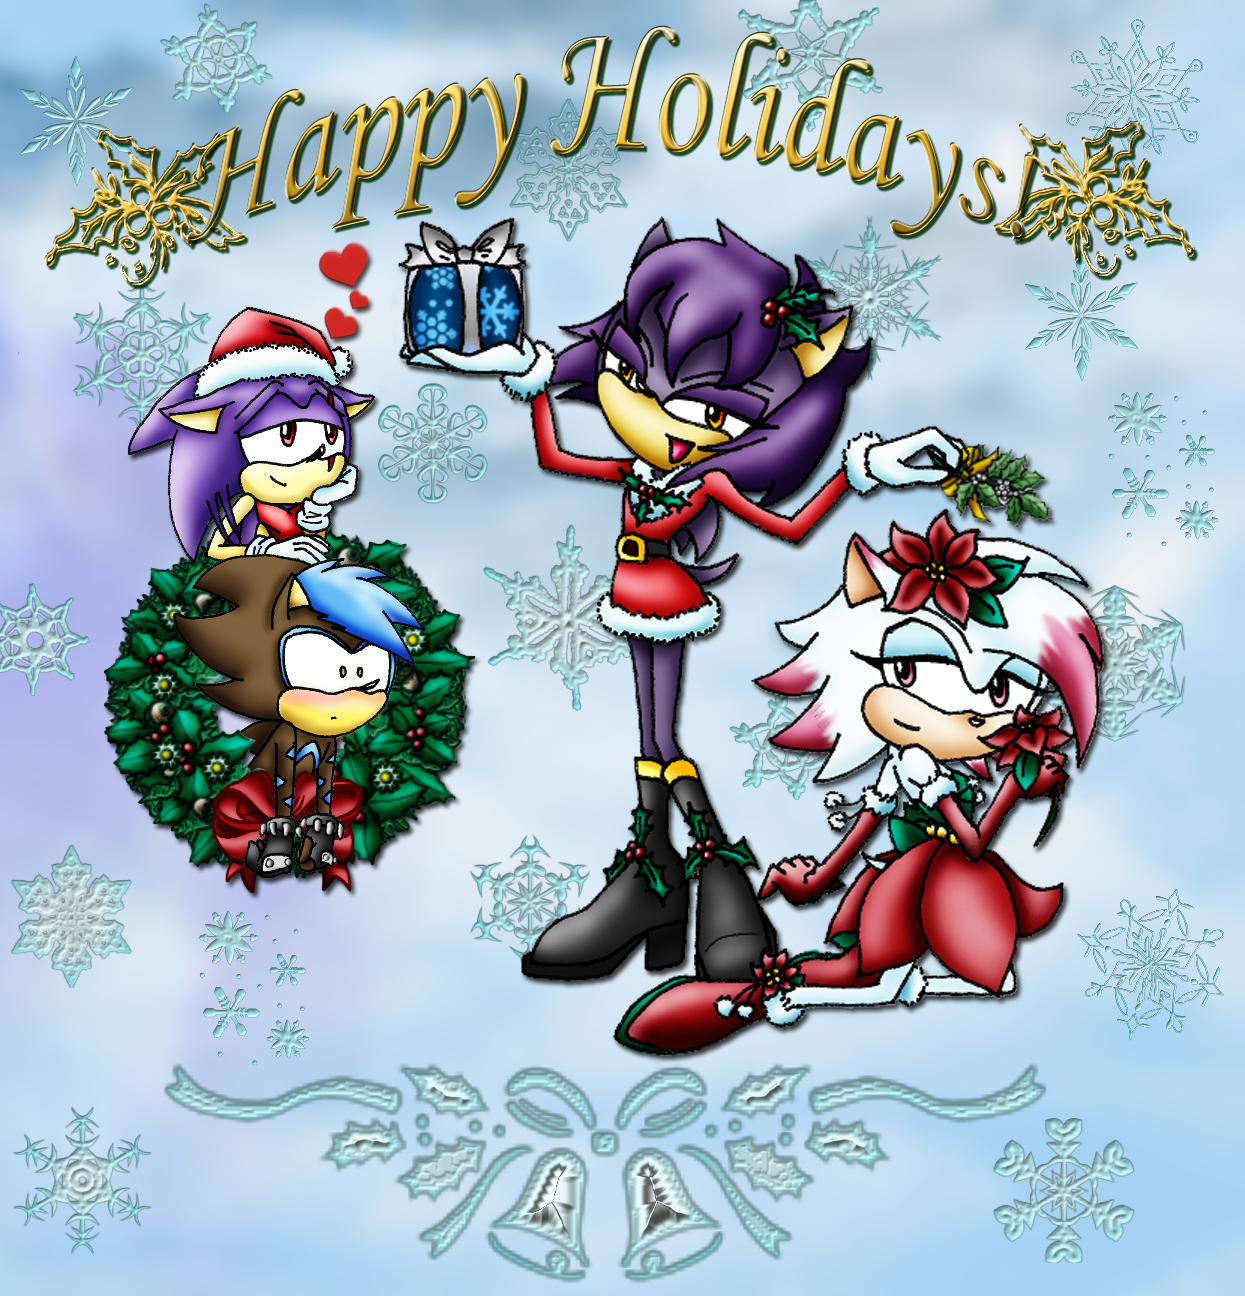 Happy hedgehog Holidays! by SaturnGrl